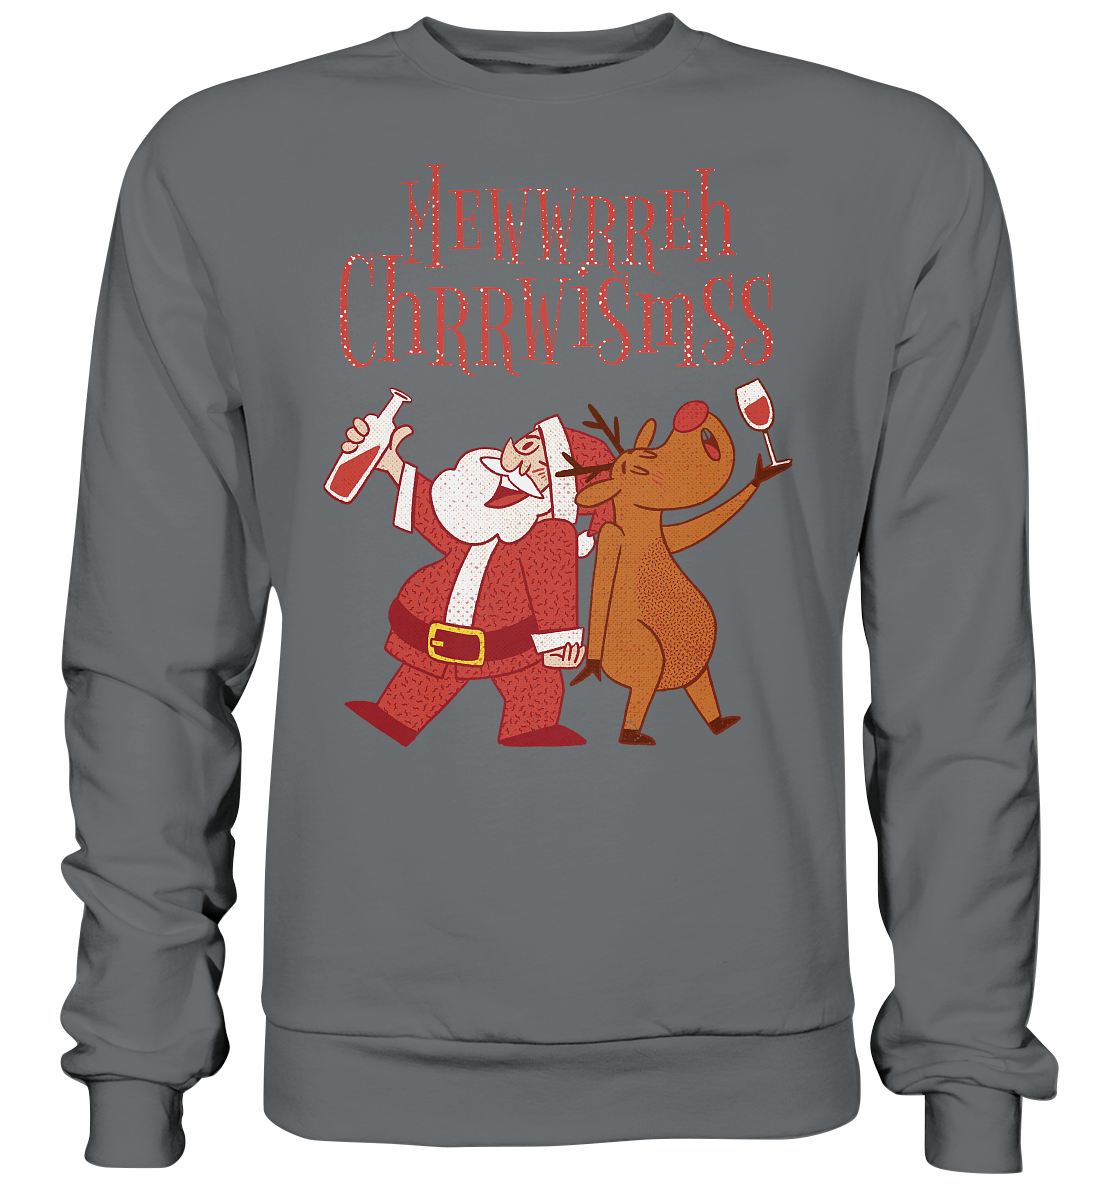 Betrunkerner Nikolaus mit Rentier - Basic Sweatshirt